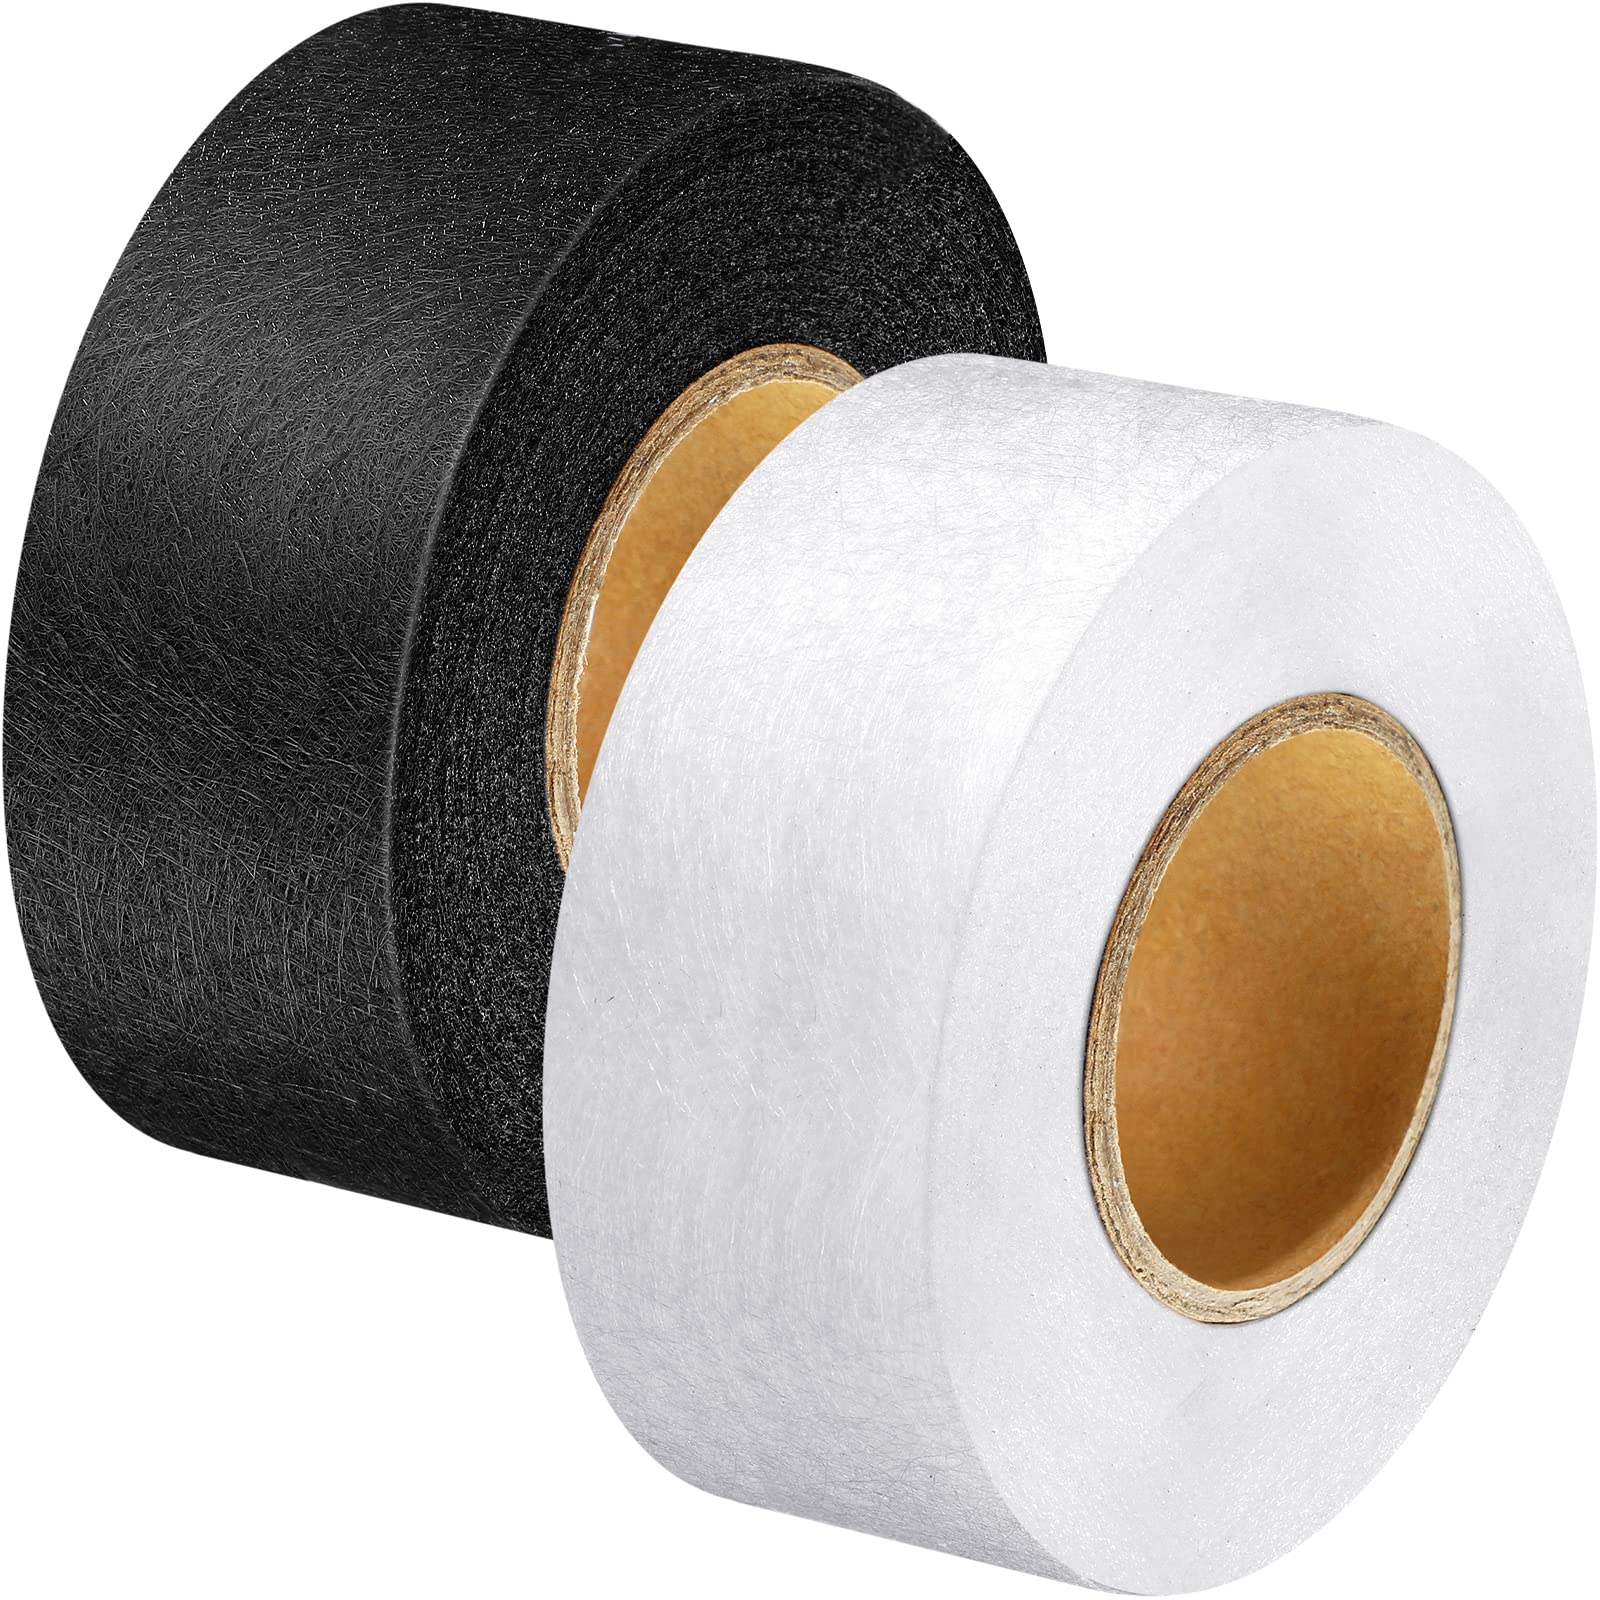 Outus Iron on Hem Tape Fabric Fusing Hemming Tape Wonder Web Adhesive Hem  Tape for Pants Each 27 Yards, 2 Pack (Black, 1 Inch)